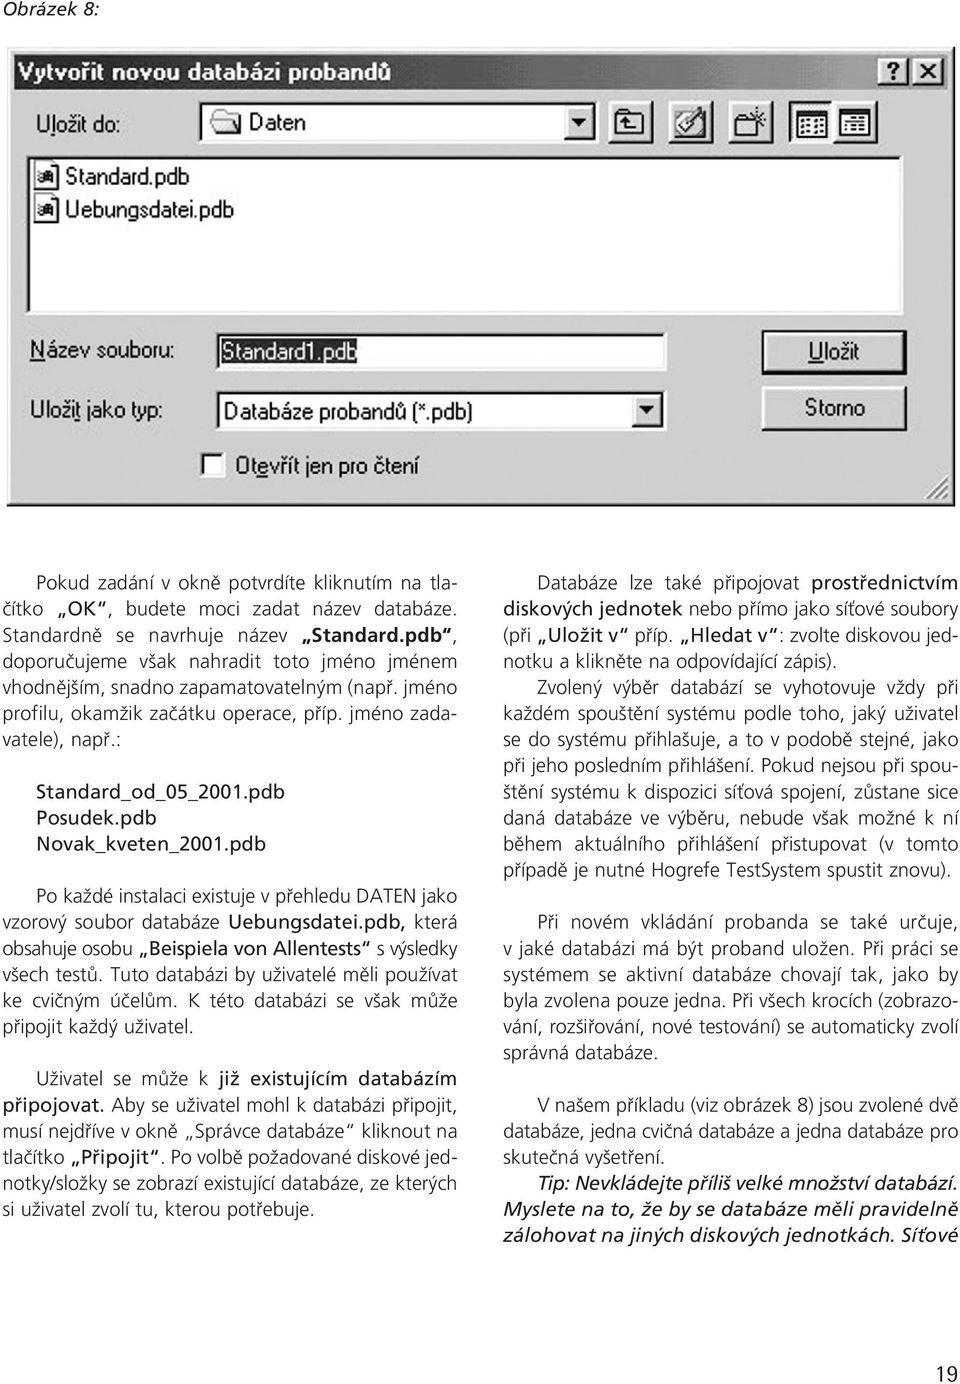 pdb Novak_kveten_2001.pdb Po kaïdé instalaci existuje v pfiehledu DATEN jako vzorov soubor databáze Uebungsdatei.pdb, která obsahuje osobu Beispiela von Allentests s v sledky v ech testû.